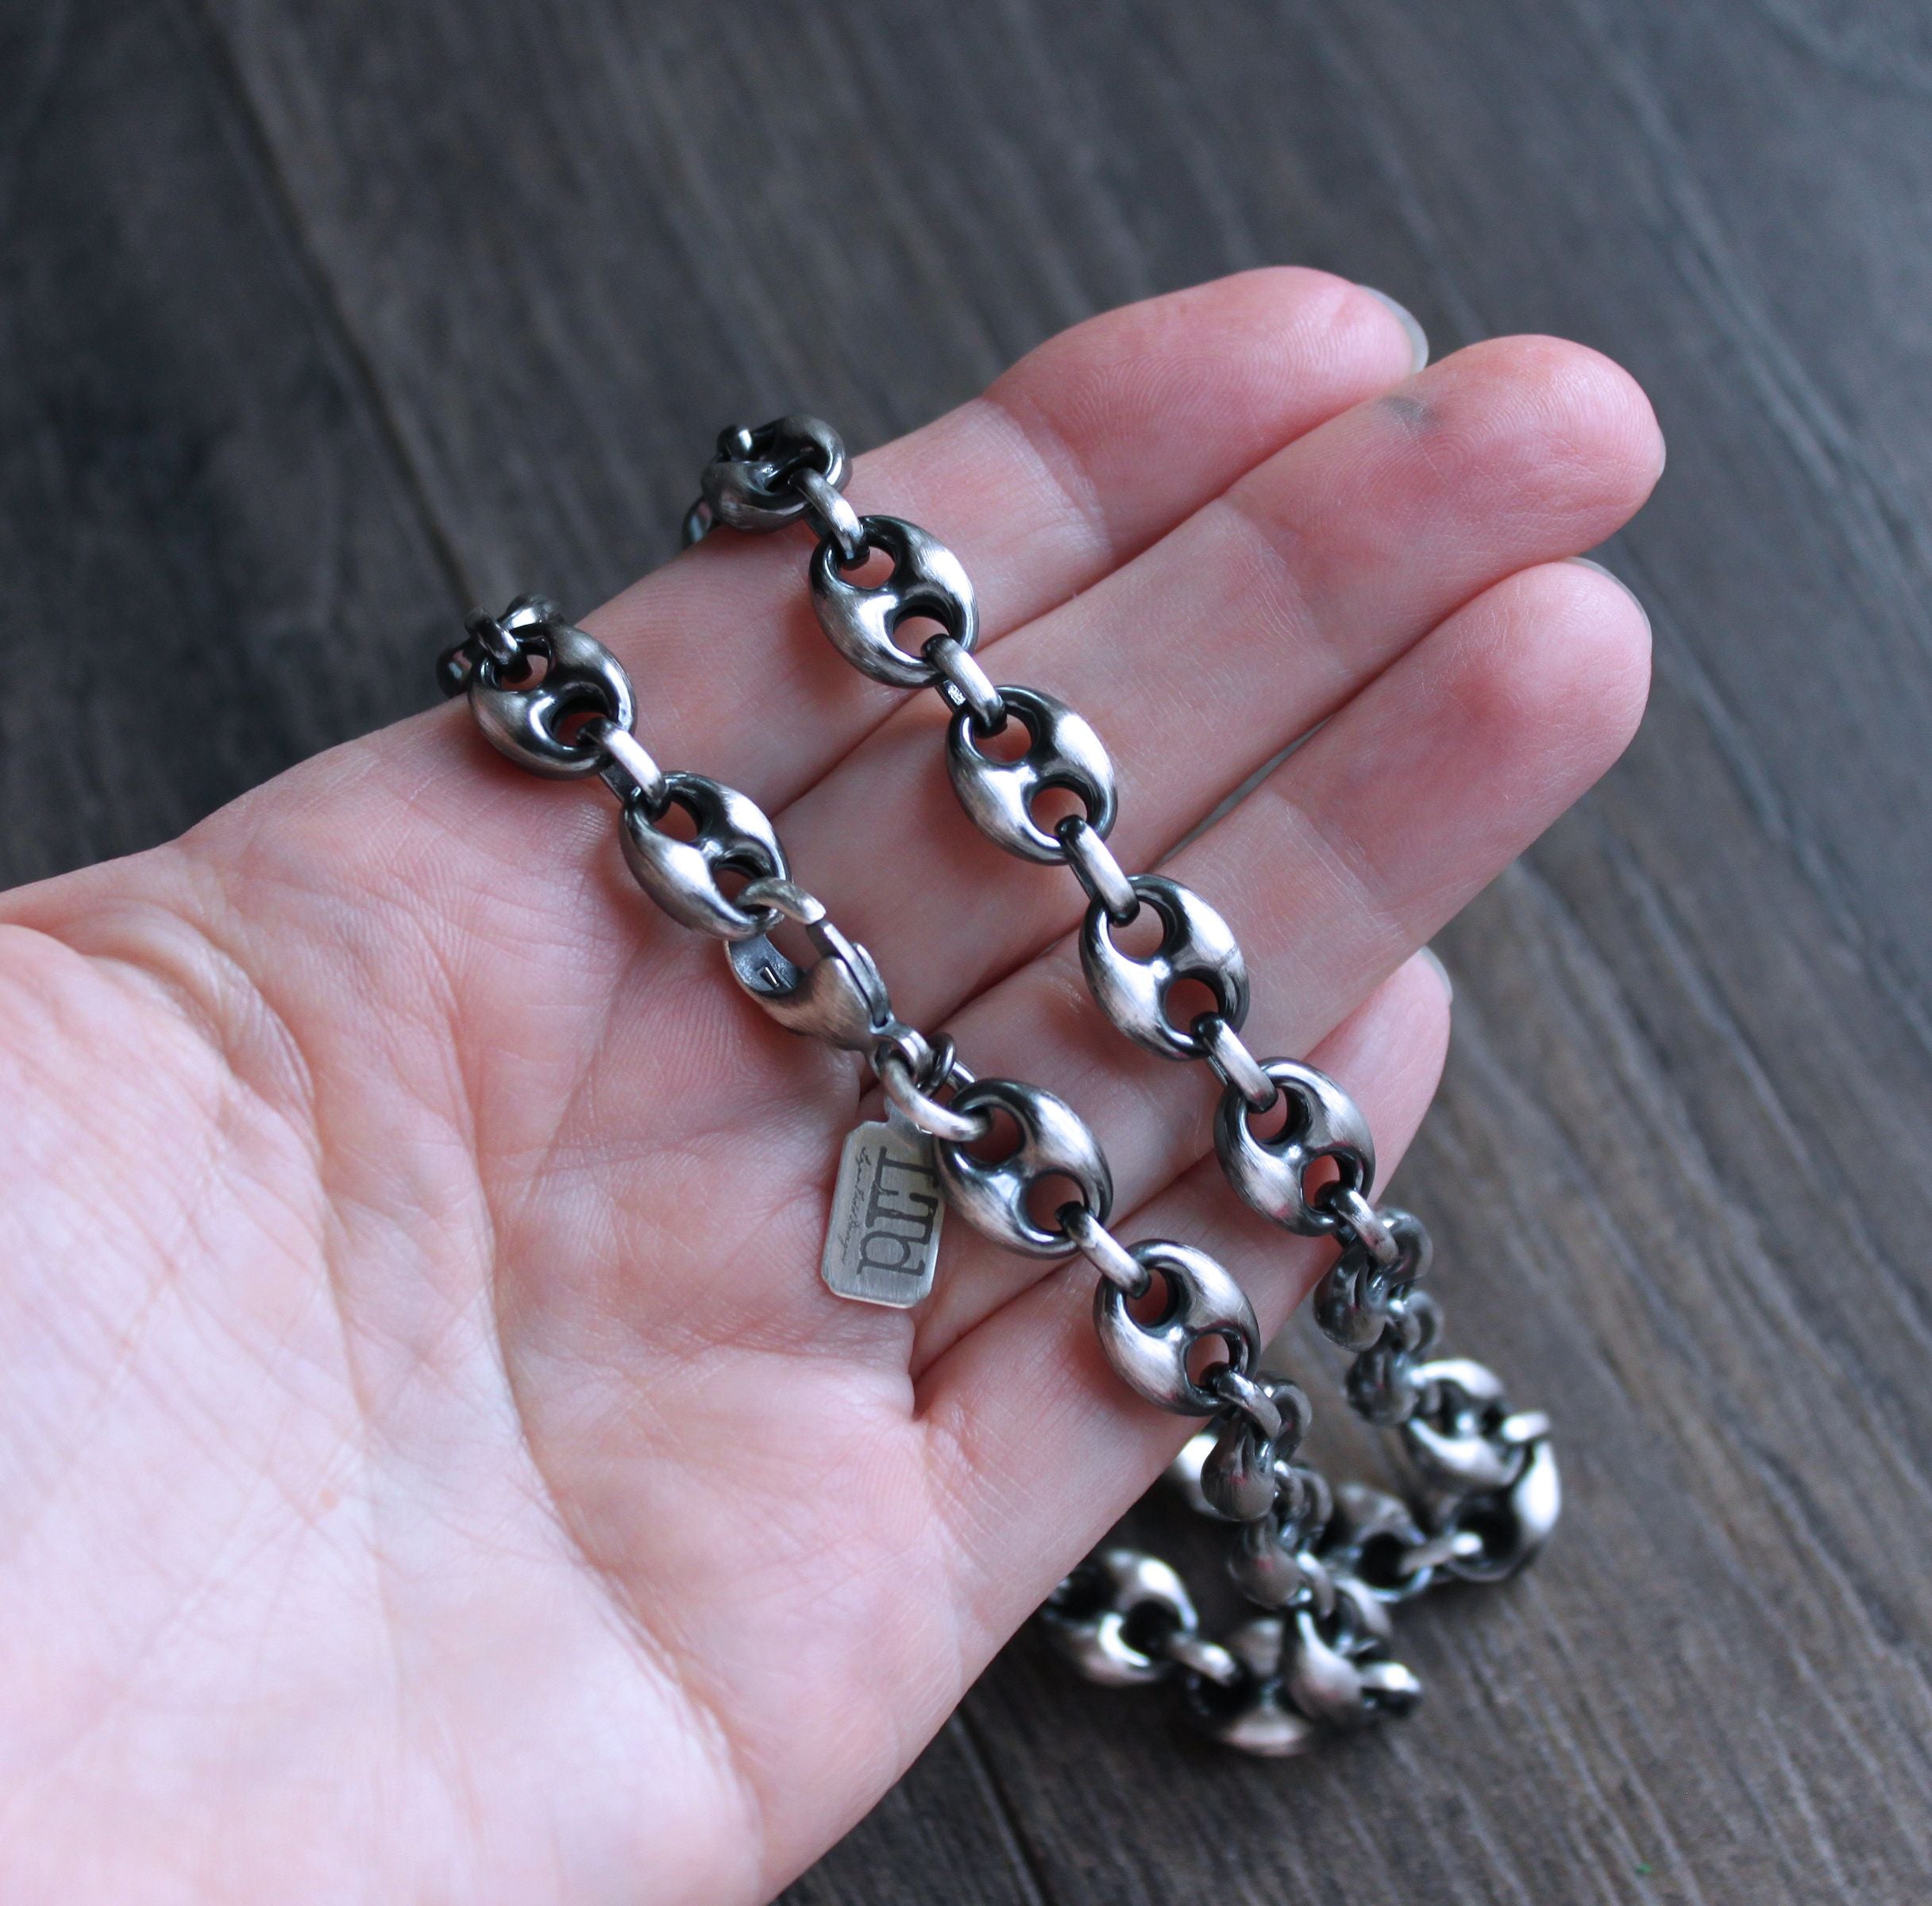 Amazon.com: Anchor necklace for men, men's bronze chain necklace, gift for  him, bronze anchor pendant, men's jewelry, nautical necklace, sailor :  Handmade Products